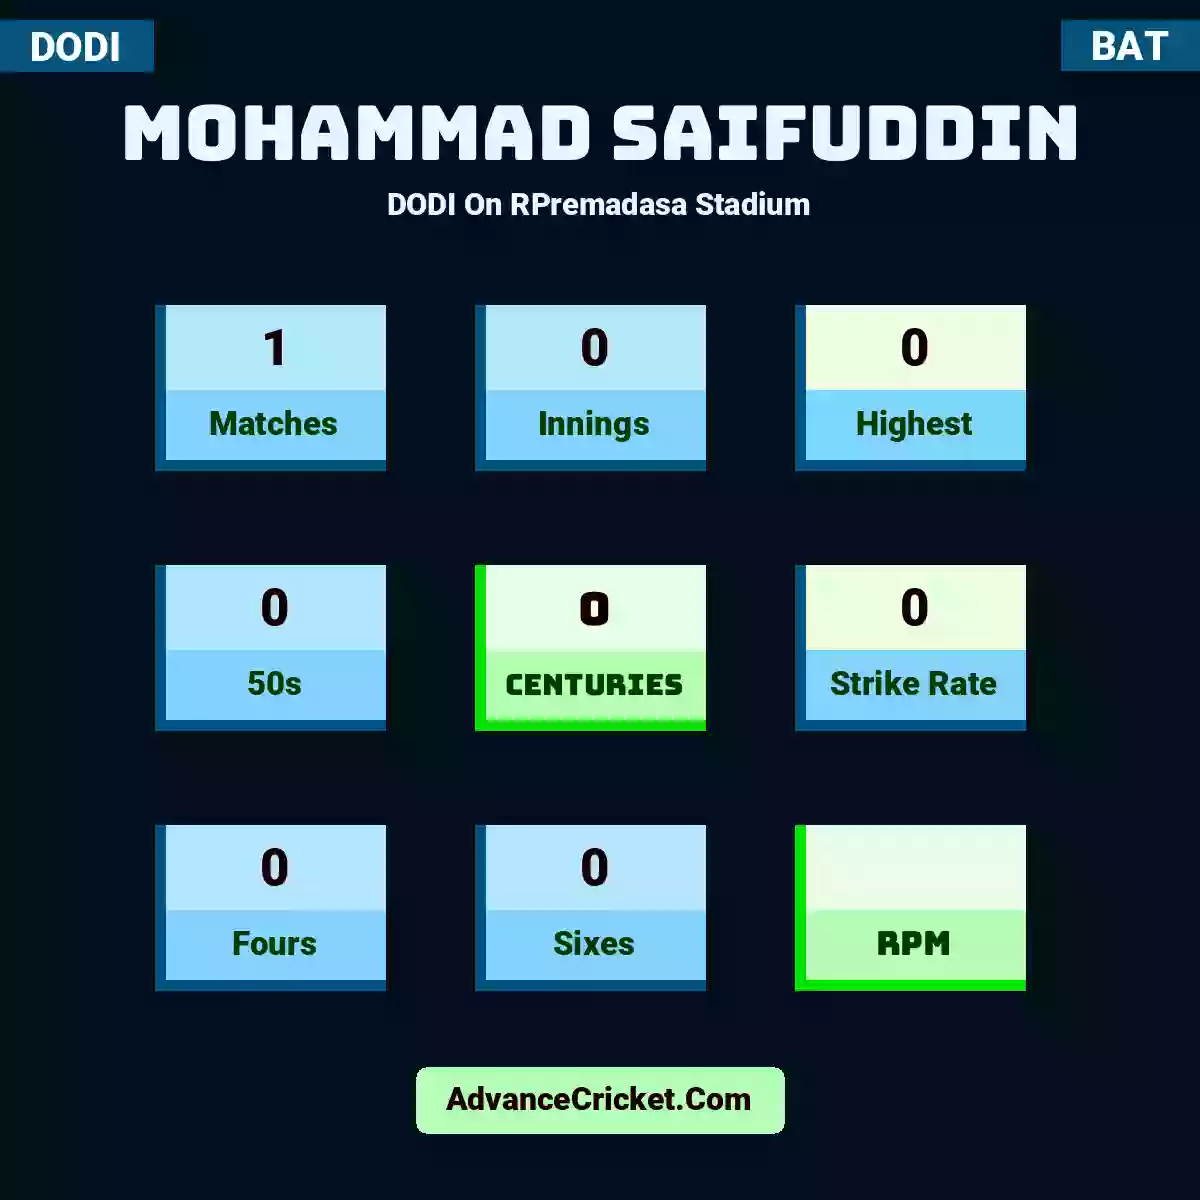 Mohammad Saifuddin DODI  On RPremadasa Stadium, Mohammad Saifuddin played 1 matches, scored 0 runs as highest, 0 half-centuries, and 0 centuries, with a strike rate of 0. M.Saifuddin hit 0 fours and 0 sixes.